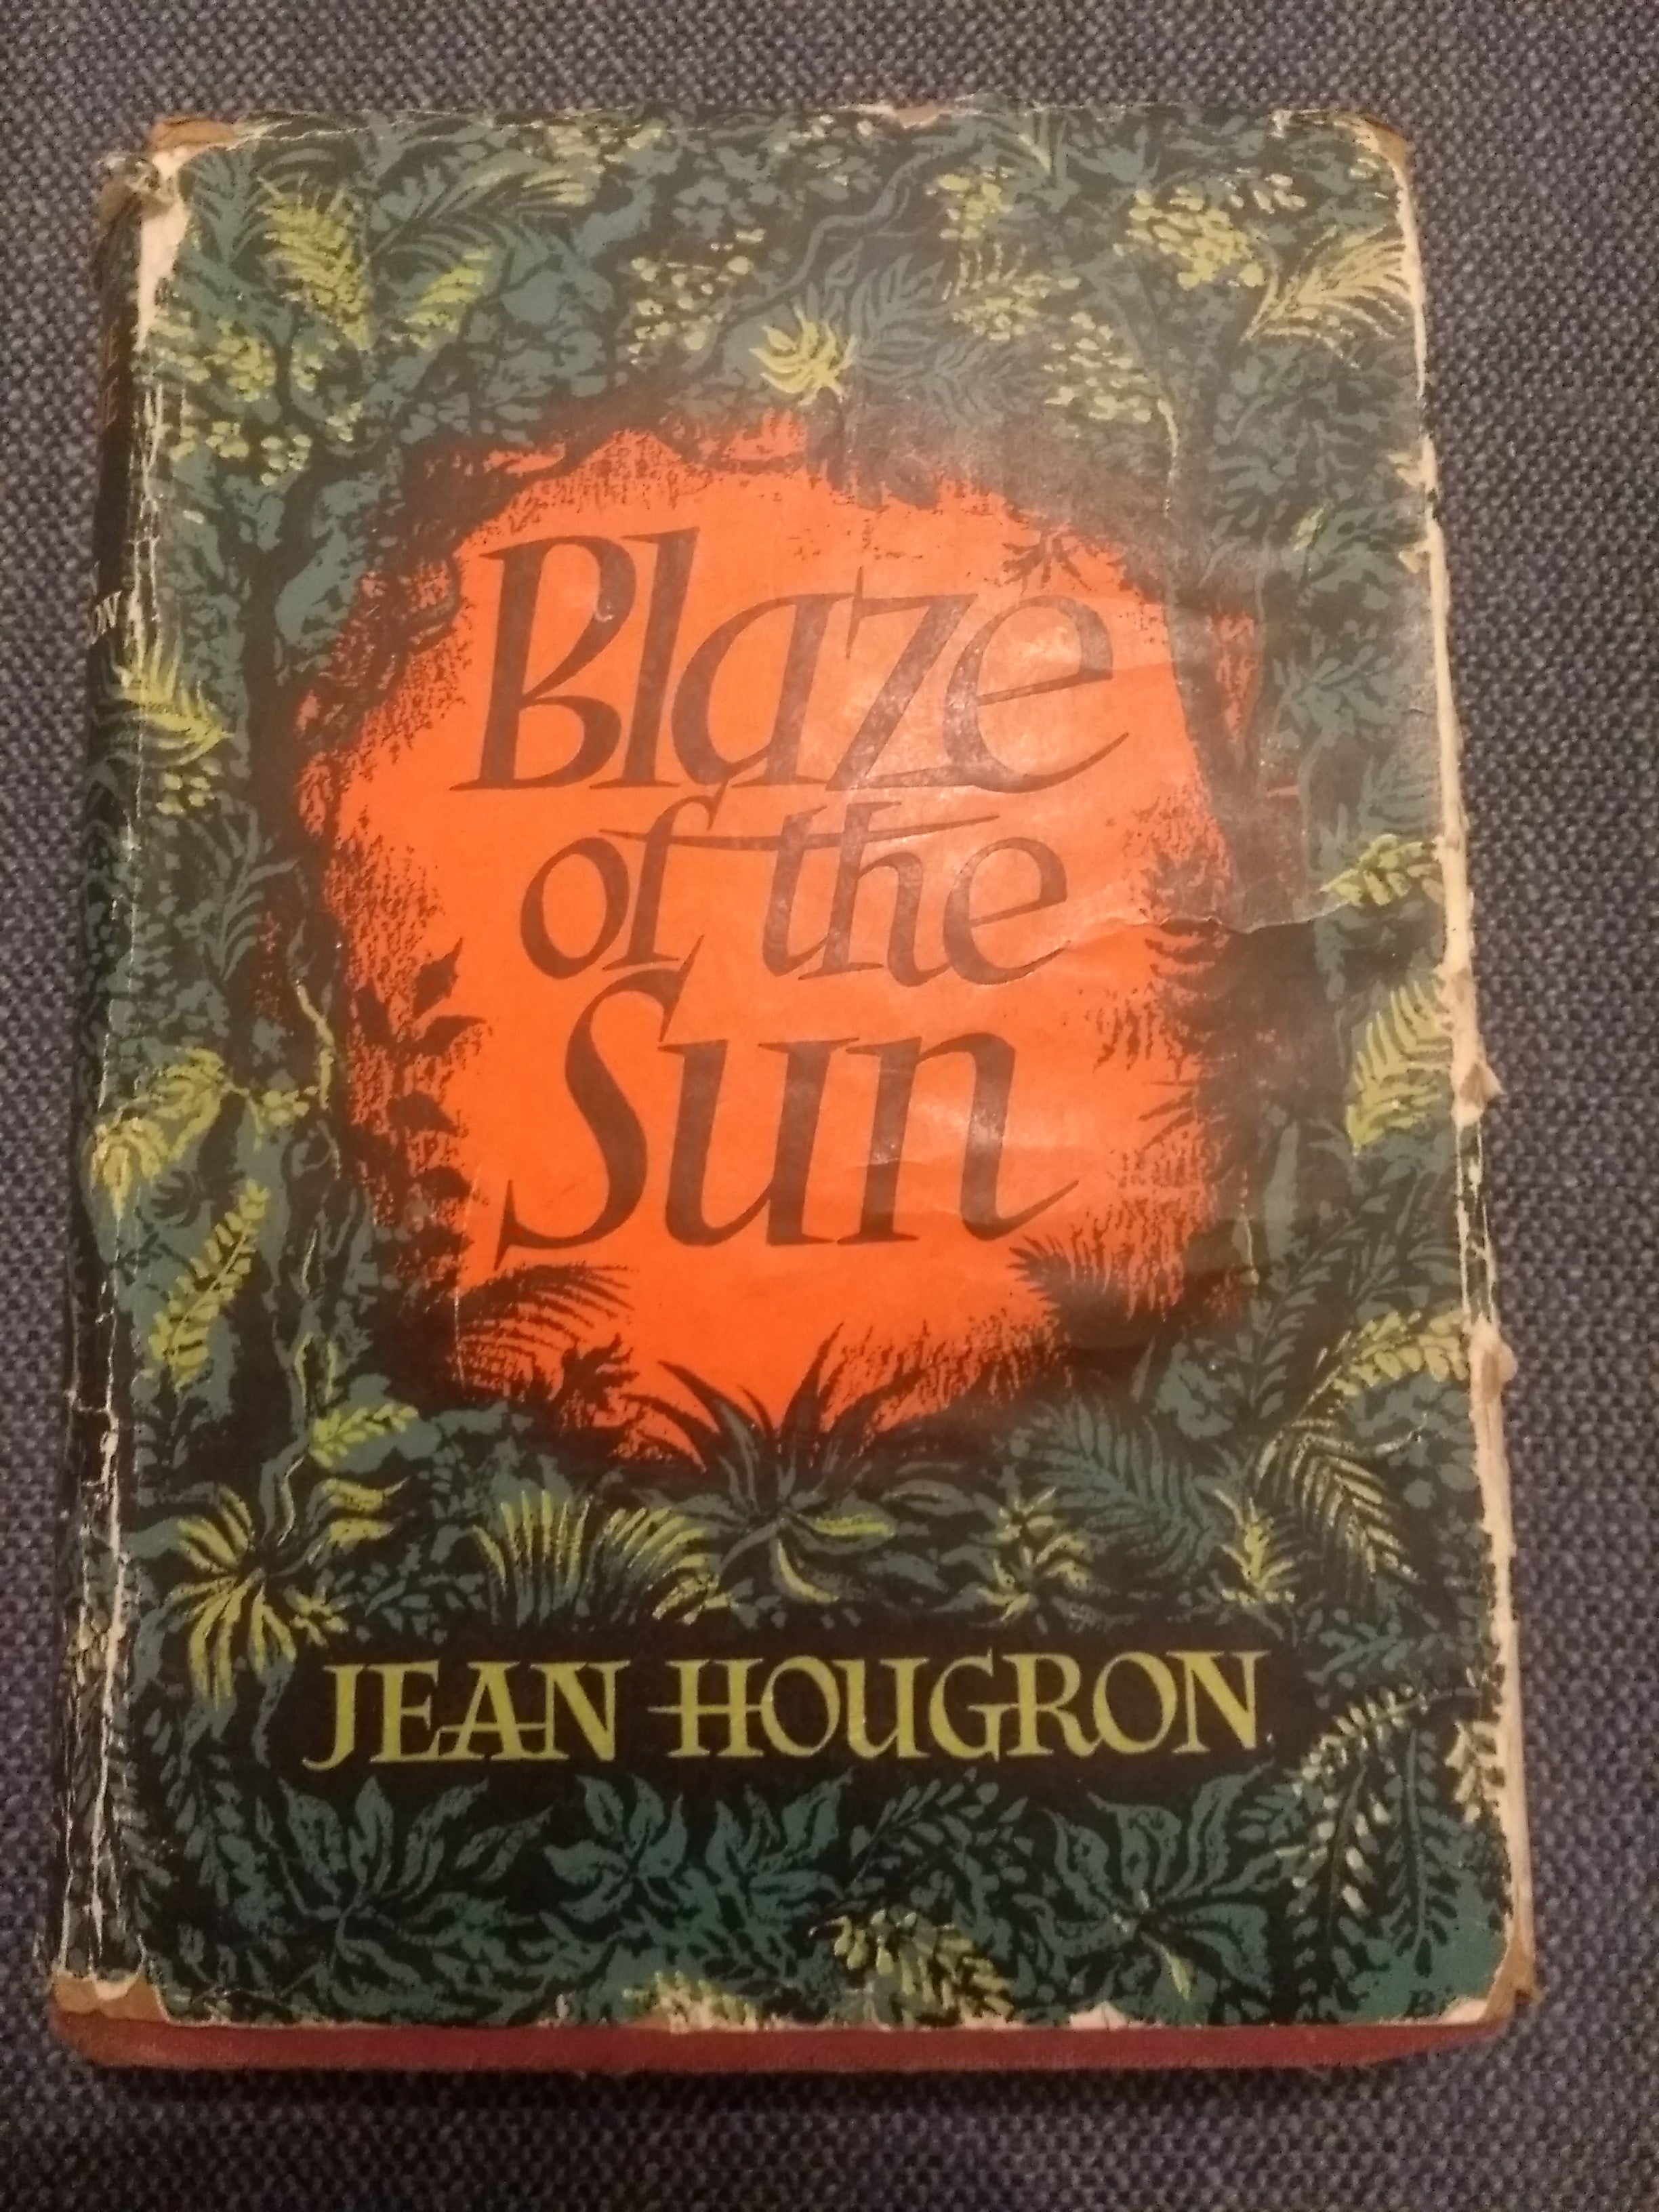 Blaze of the Sun, by Jean Hougron, translated by Mervyn Savill